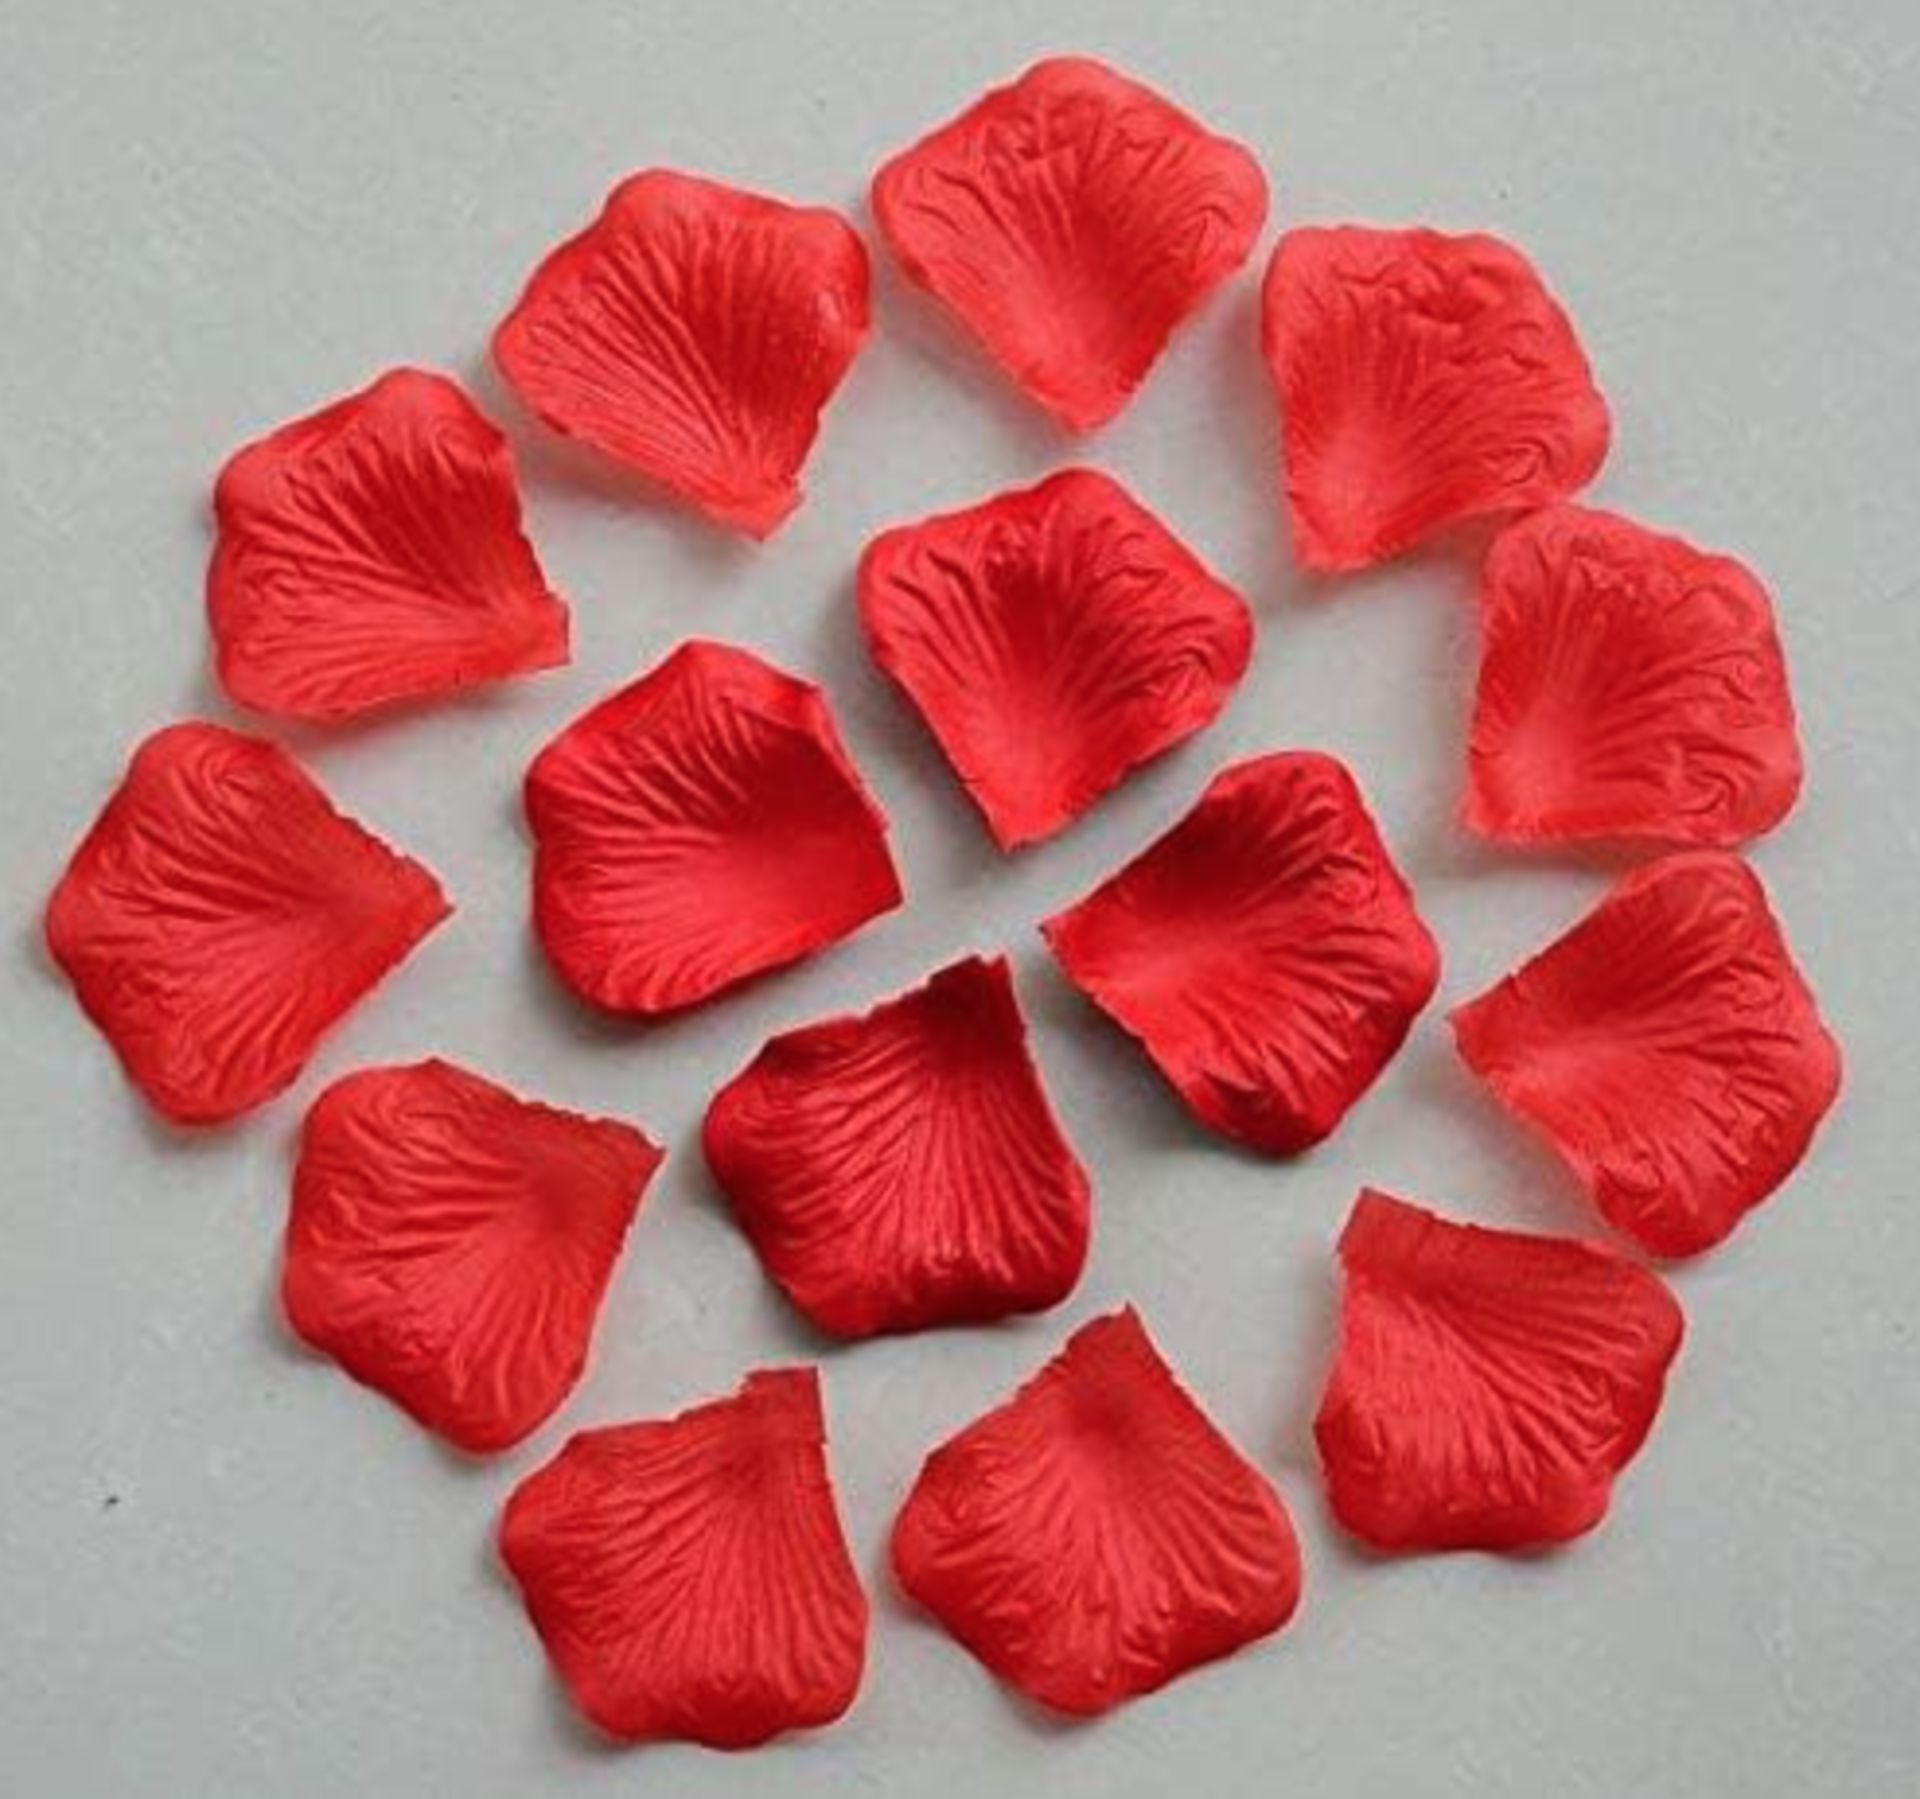 1,000pcs Deep Red Silk Rose Petals Valentines Day Wedding Confetti RRP £30 (10 x 100pcs) - Image 3 of 3